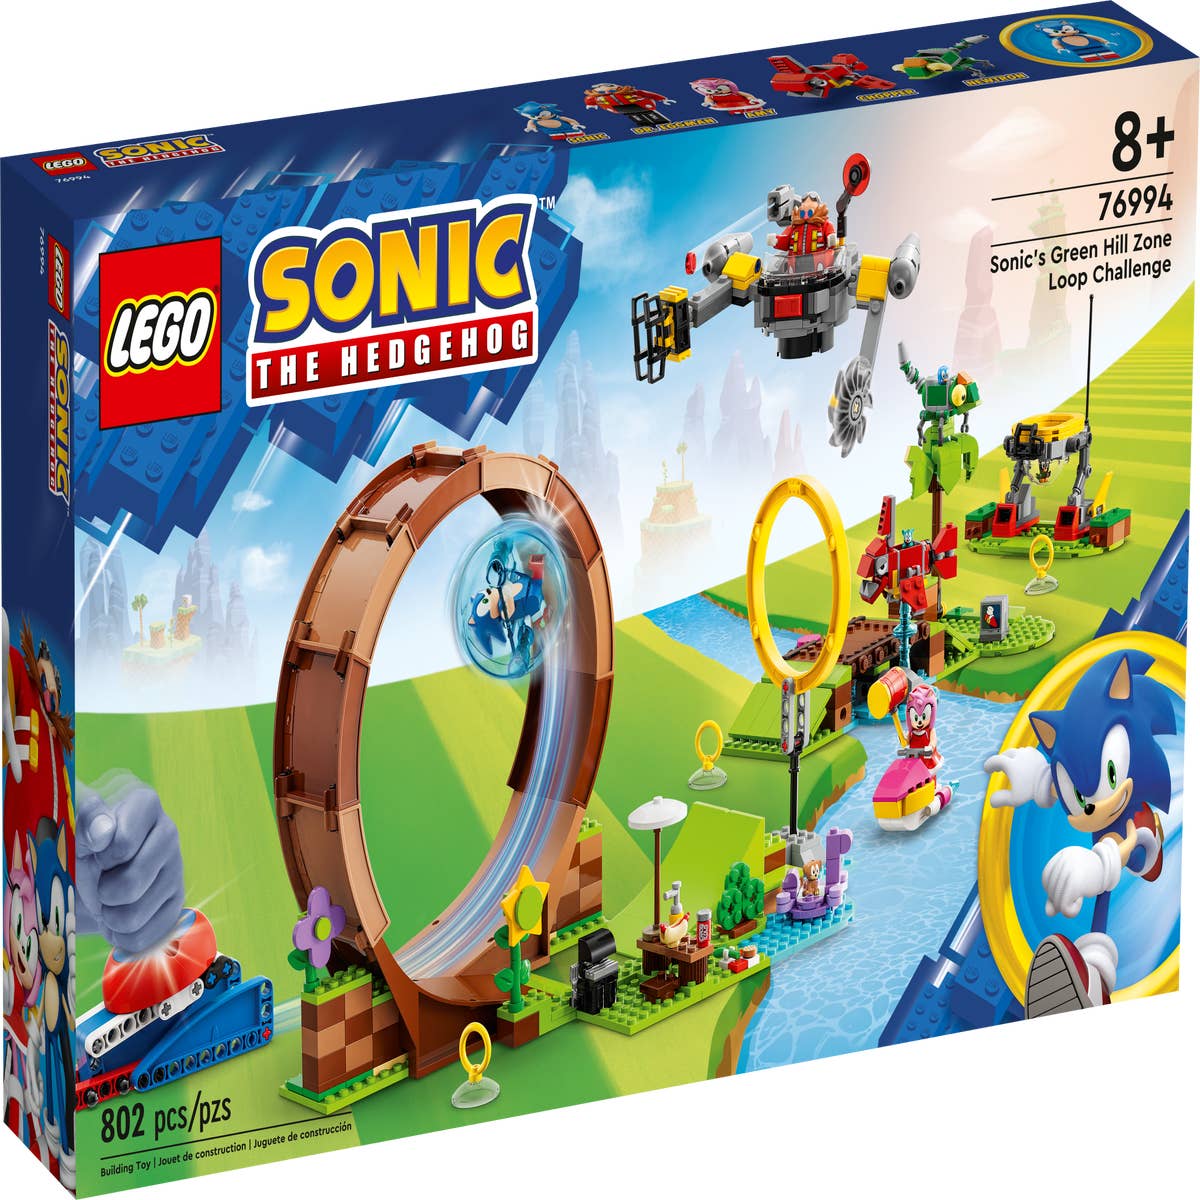 LEGO Dimensions - Sonic launch trailer